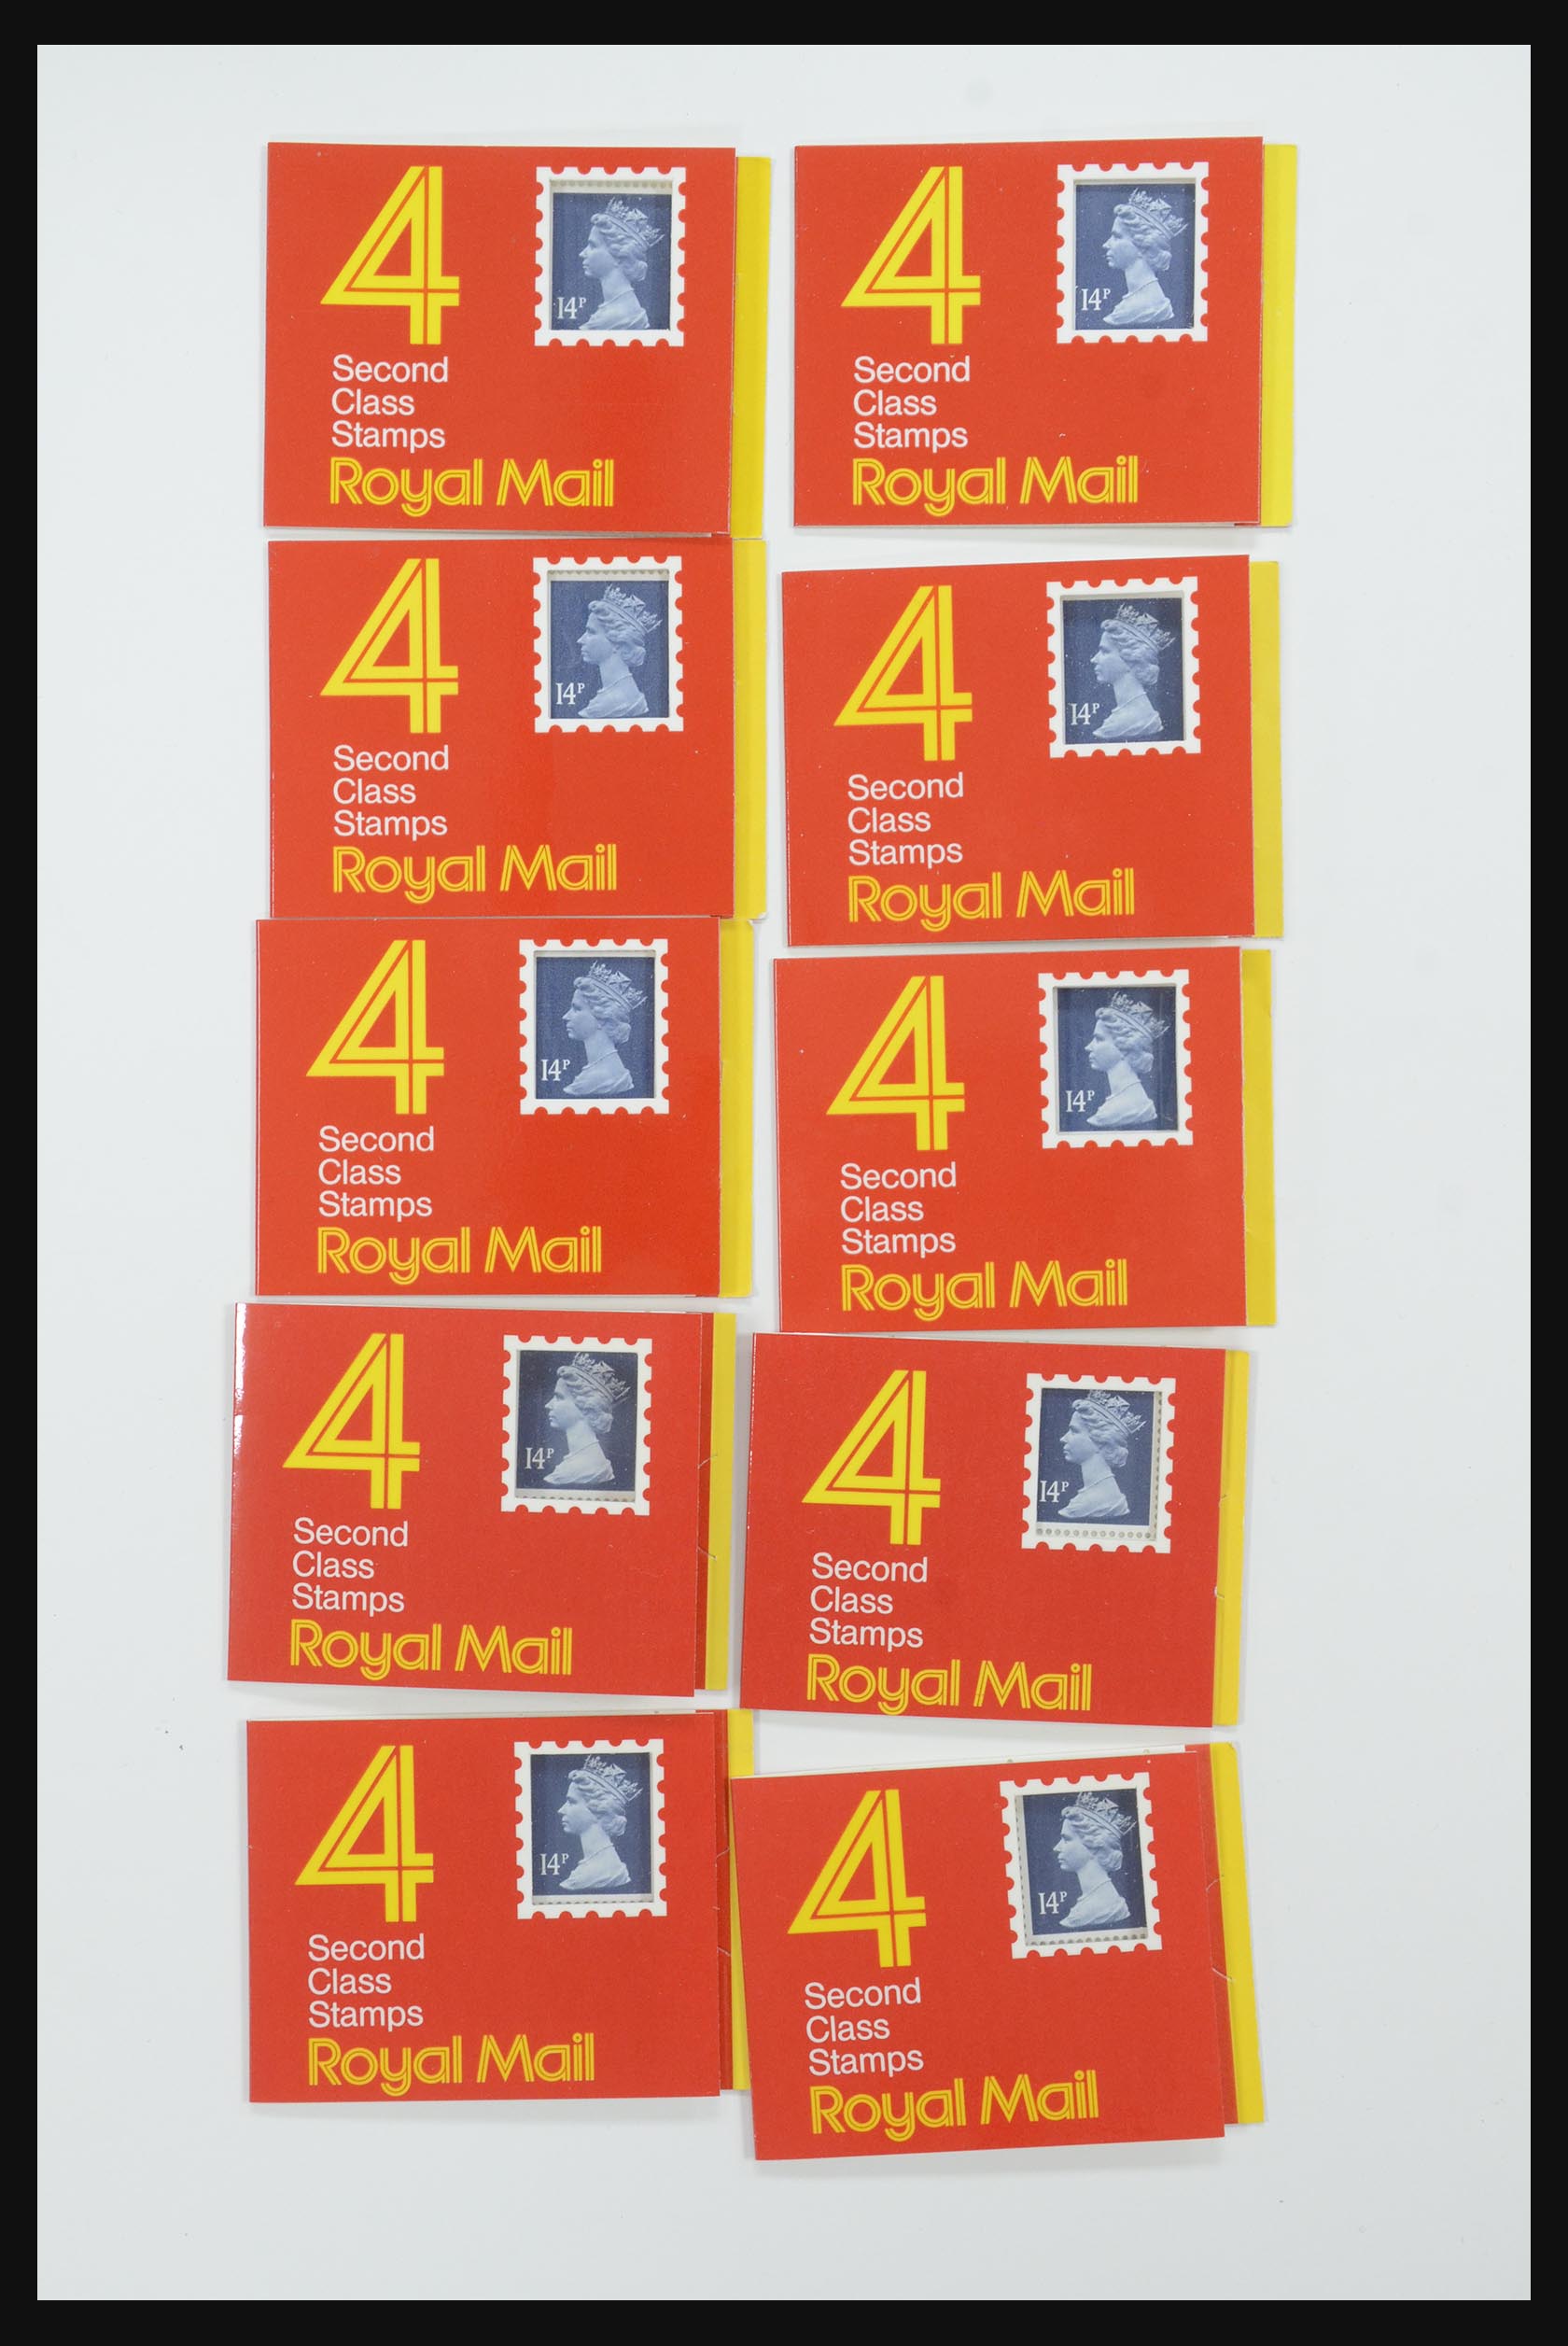 31961 057 - 31961 Great Britain stampbooklets 1971-1999.